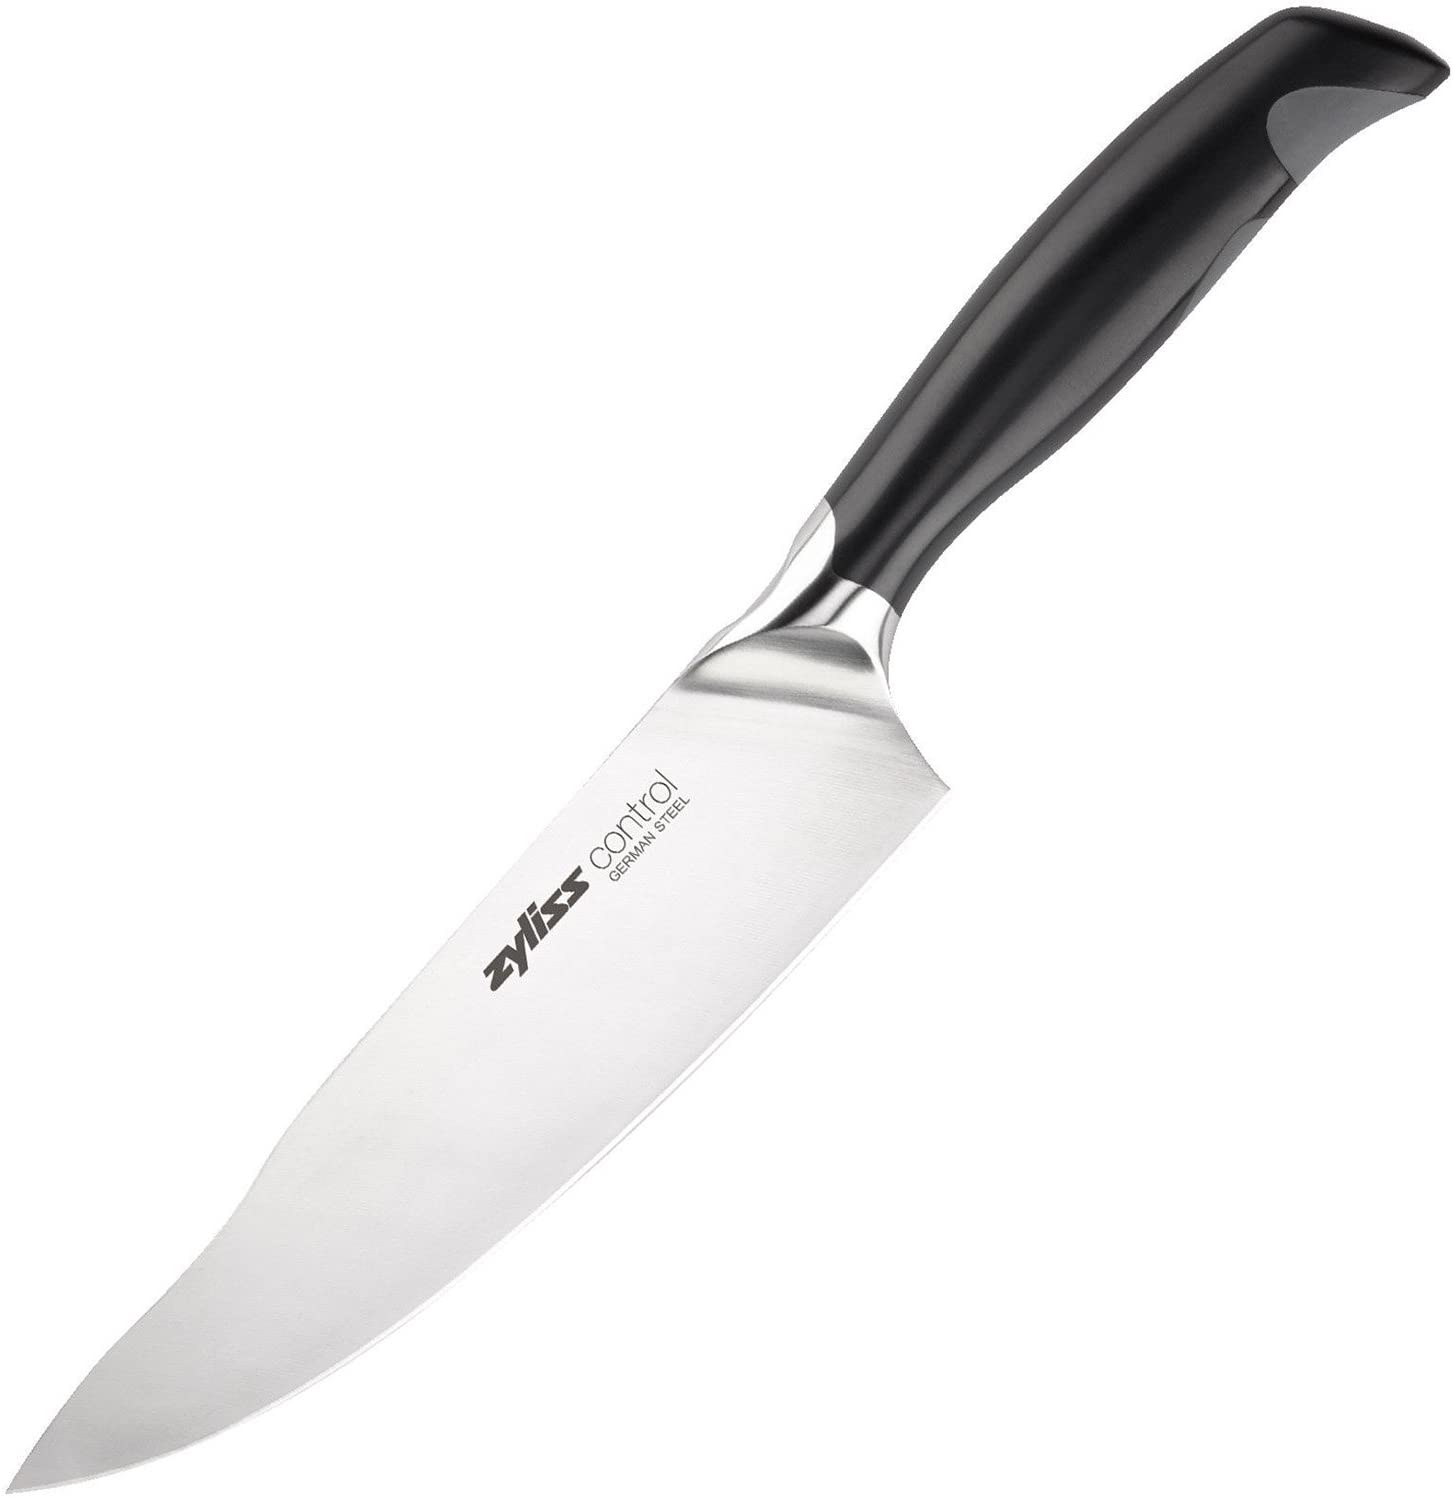 \'Zyliss E920182 \"Control/20 cm Stainless Steel Chef\'s Knife, Black, 20 x 5 x 0.5 cm